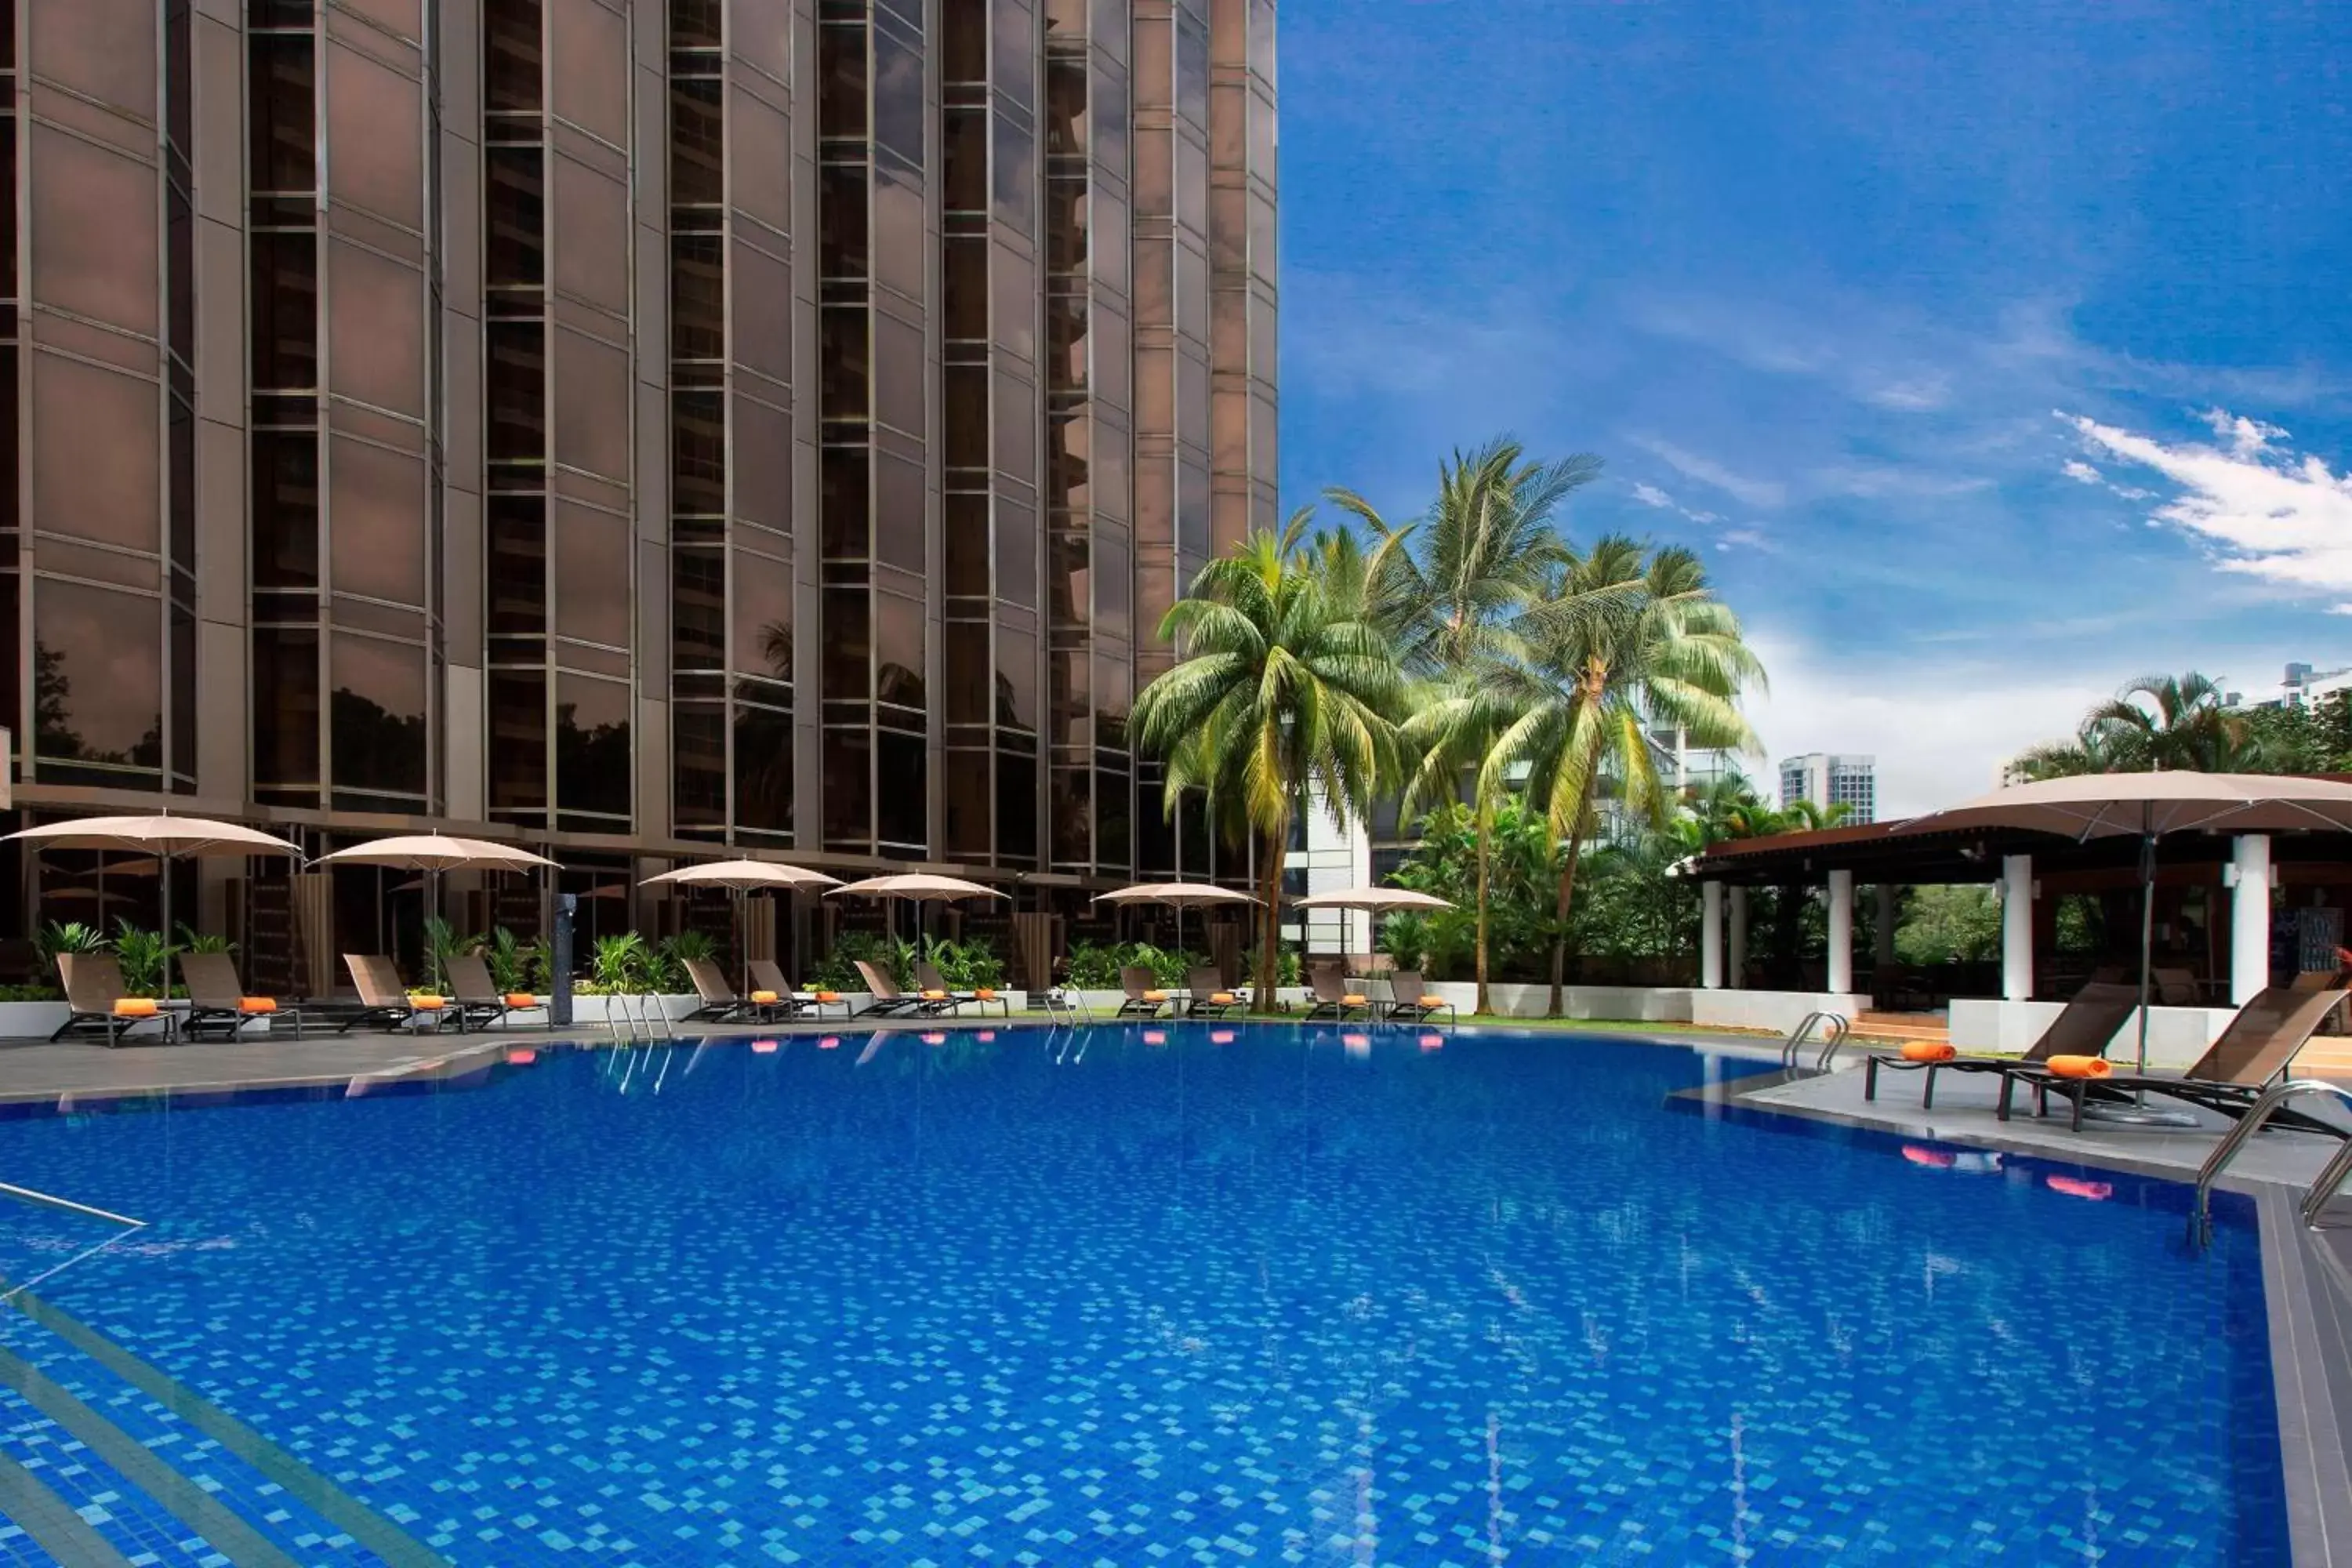 Swimming Pool in Sheraton Towers Singapore Hotel